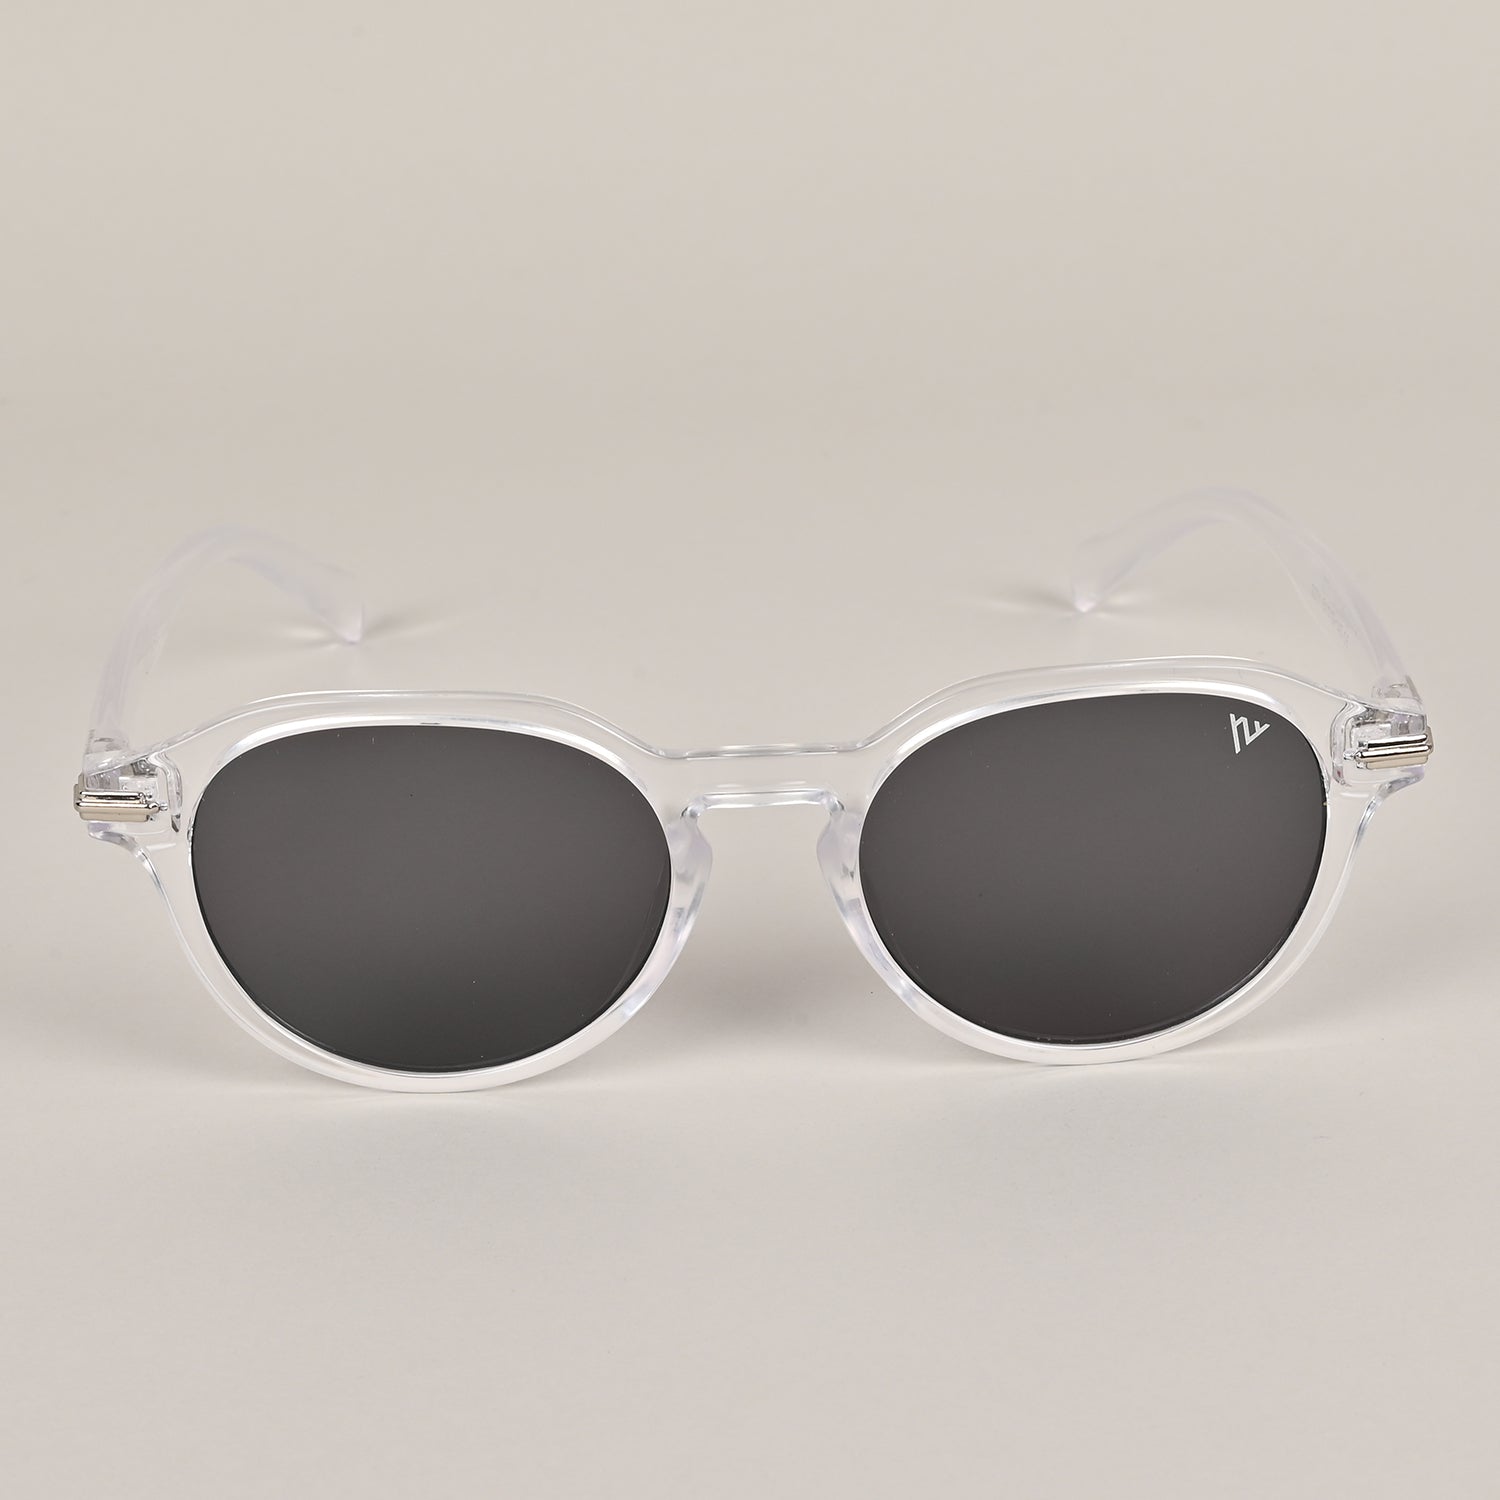 Voyage Black Round Sunglasses MG3755